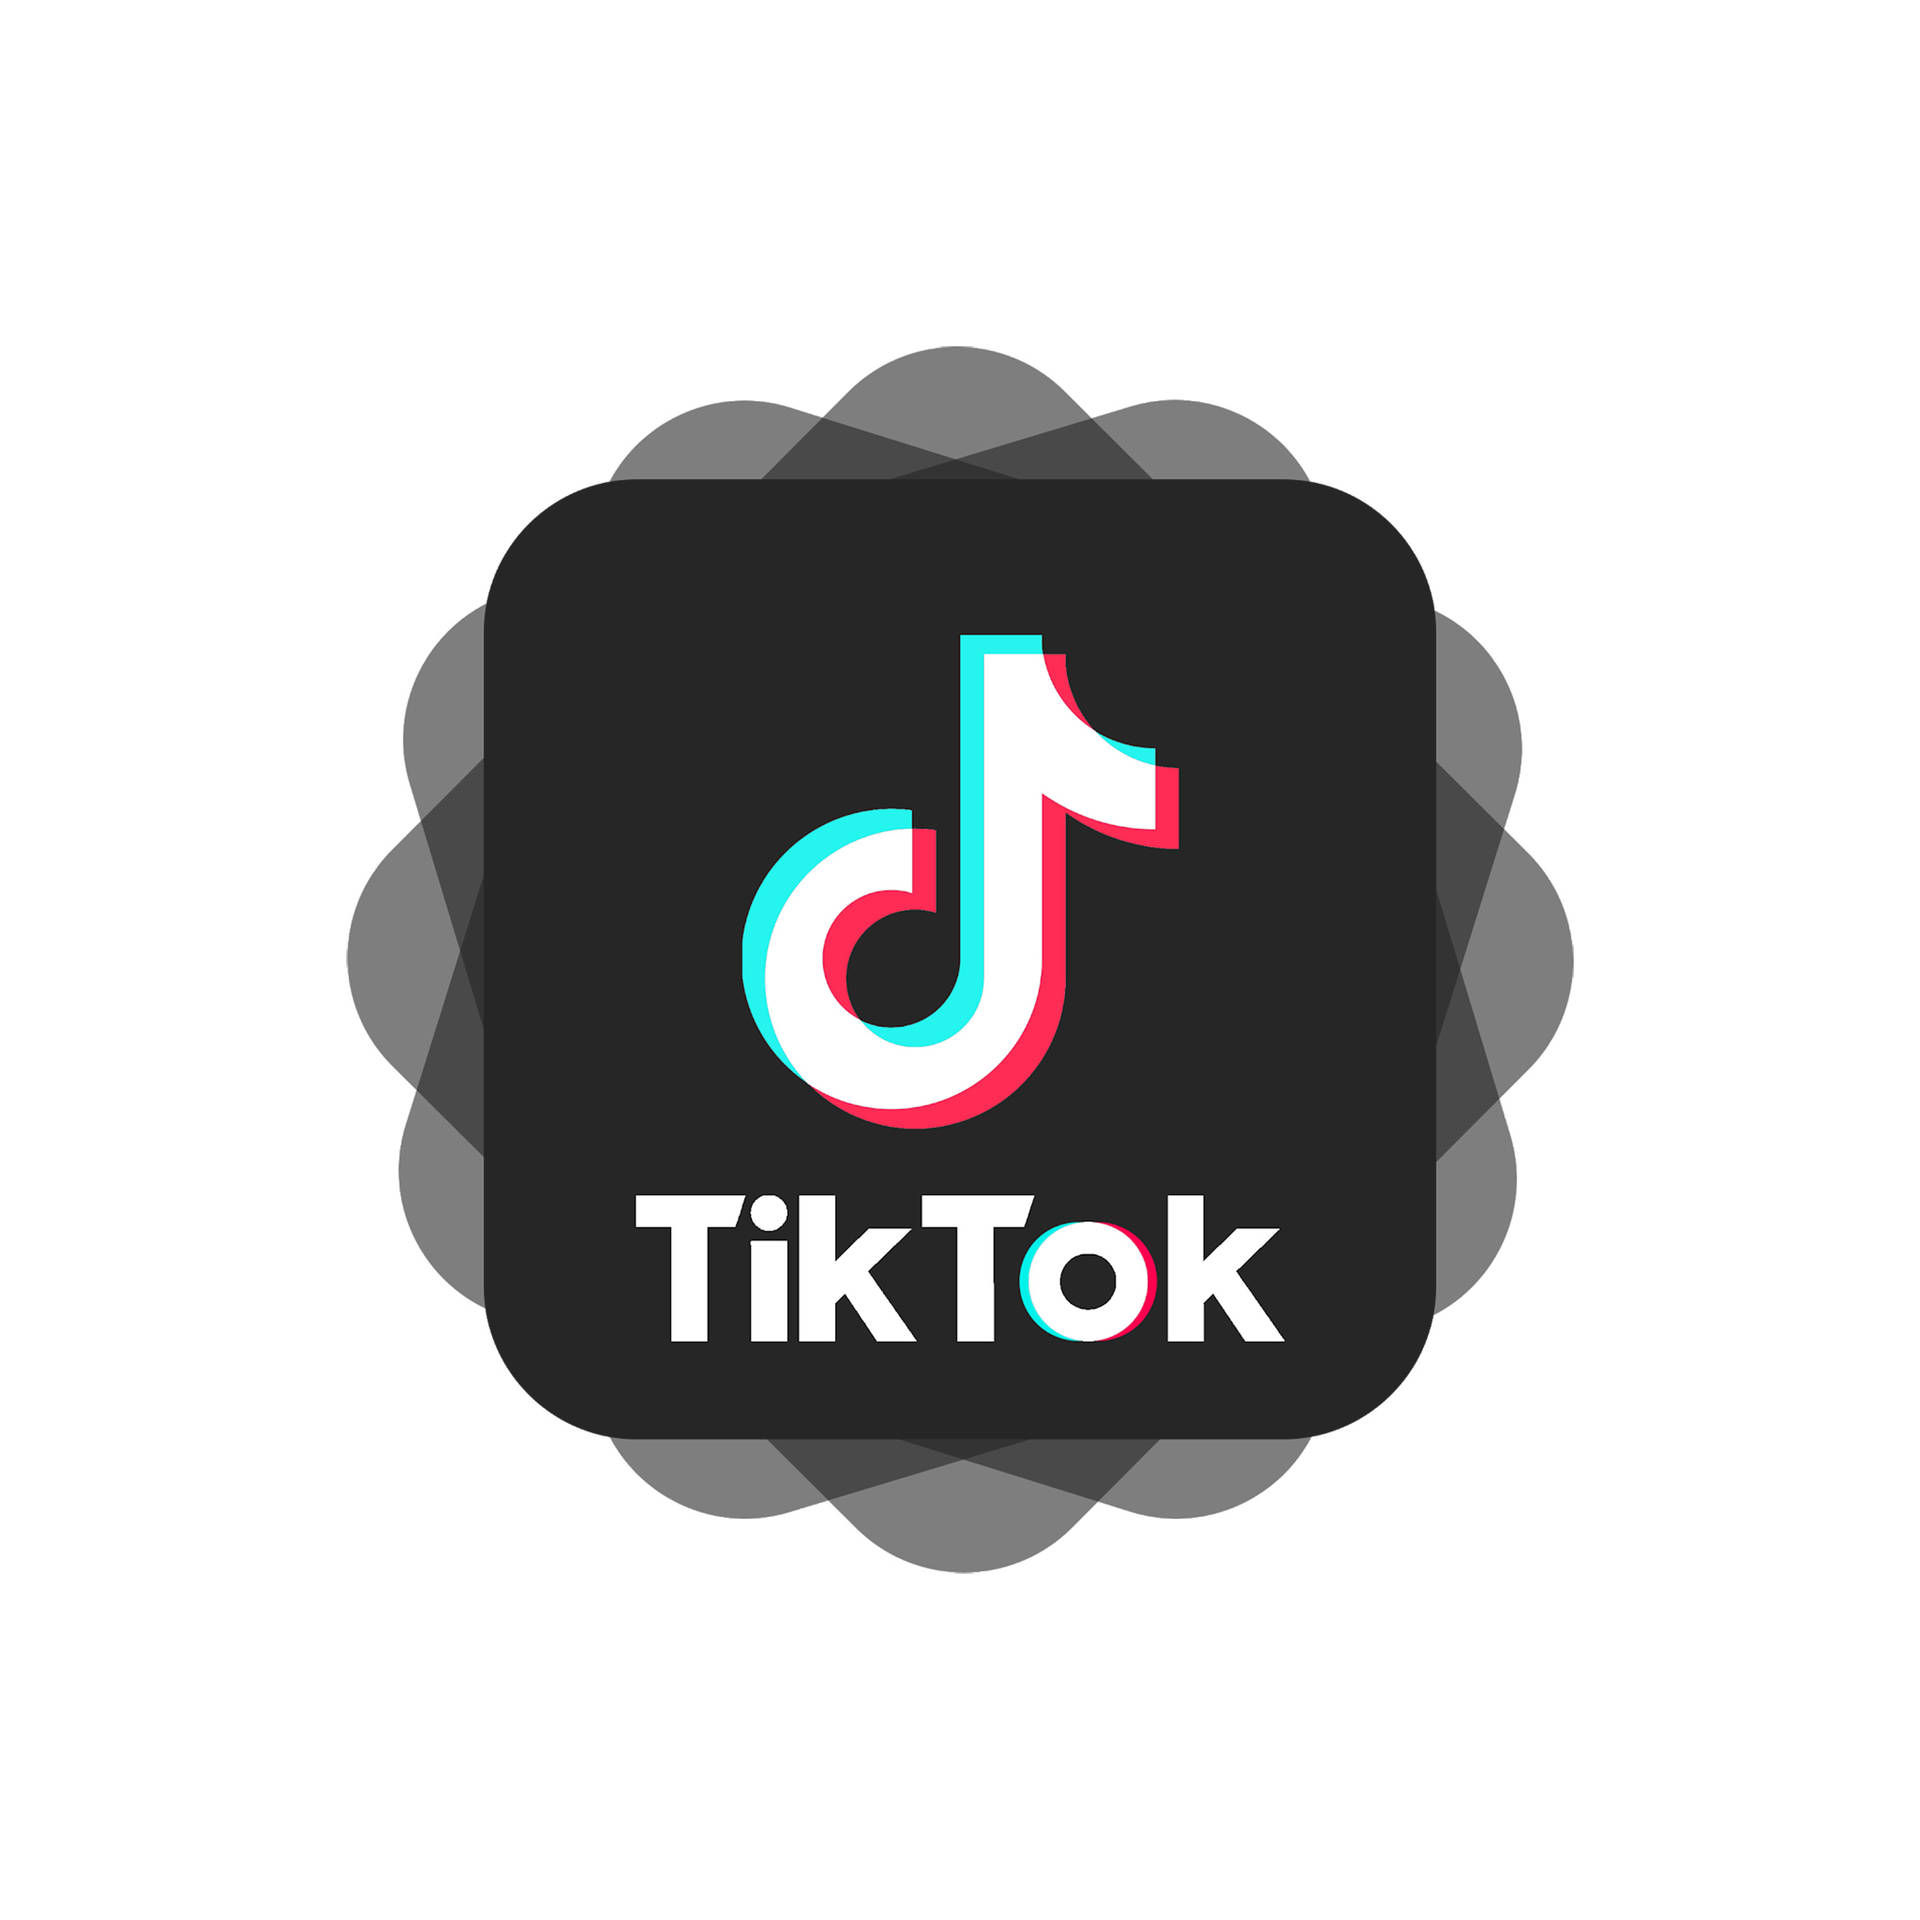 Logotipode Tiktok Transparente En Negro Y Blanco Fondo de pantalla